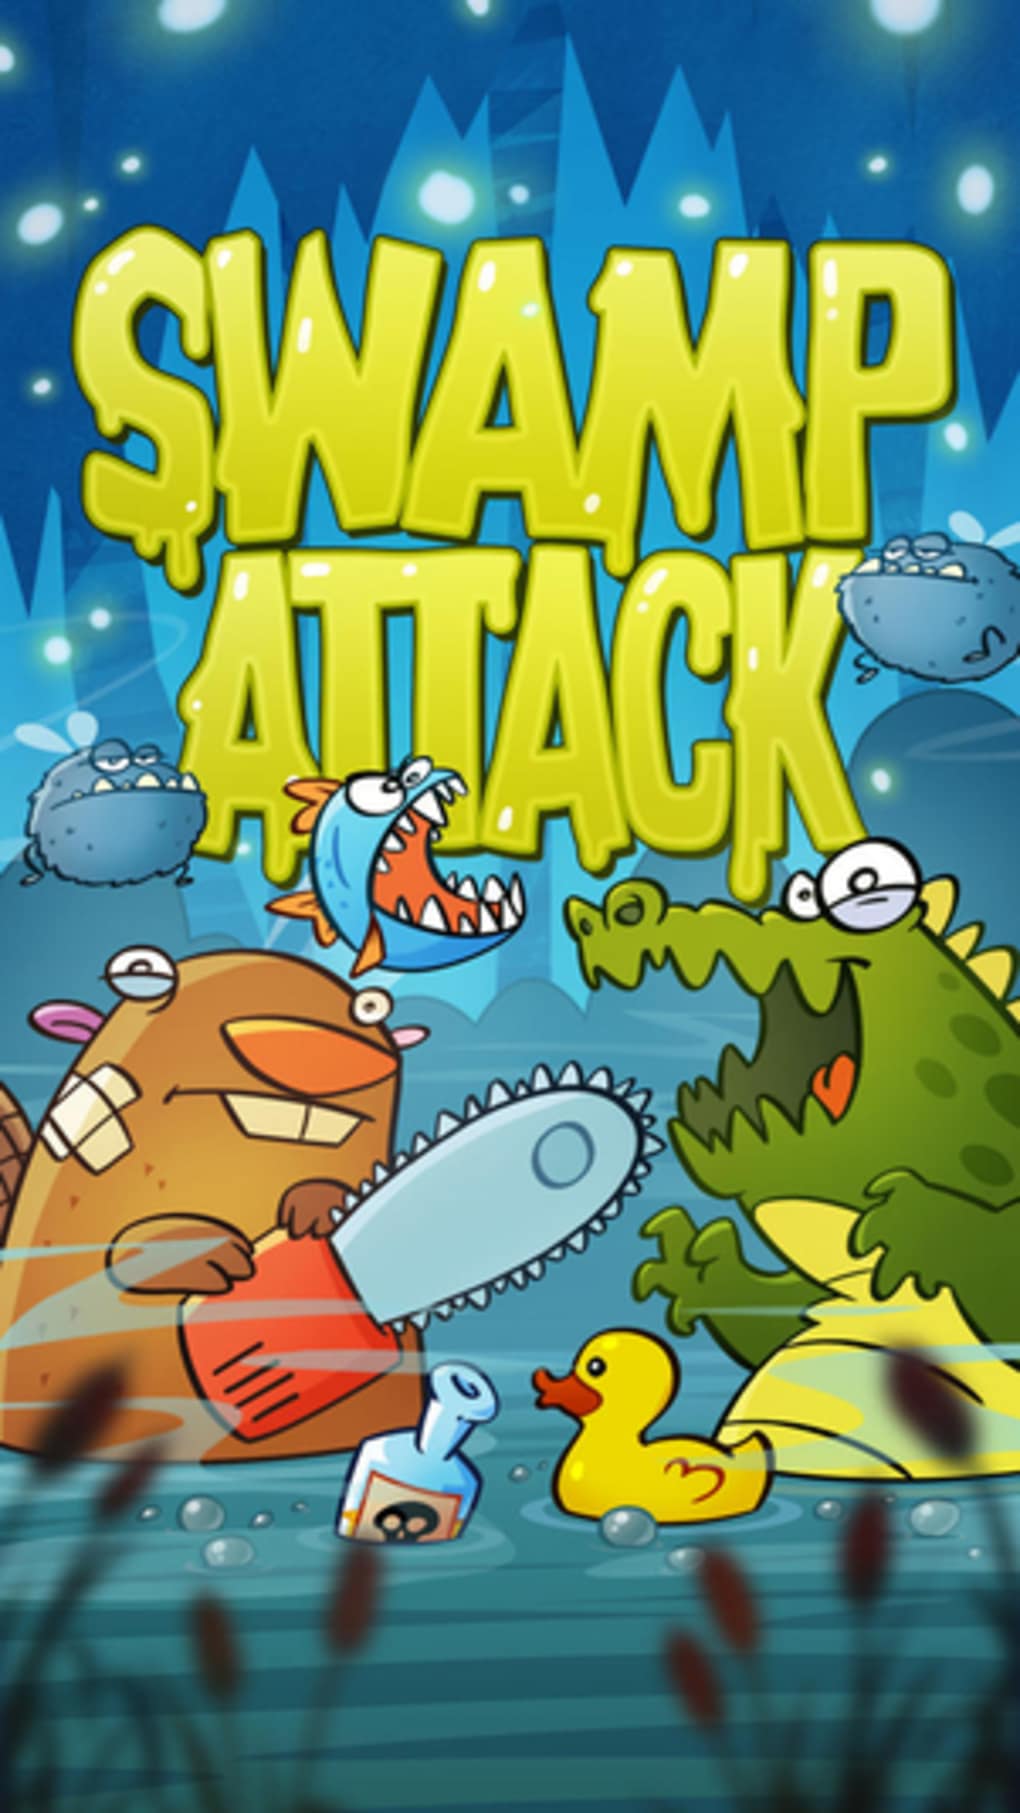 instal Swamp Attack 2 free